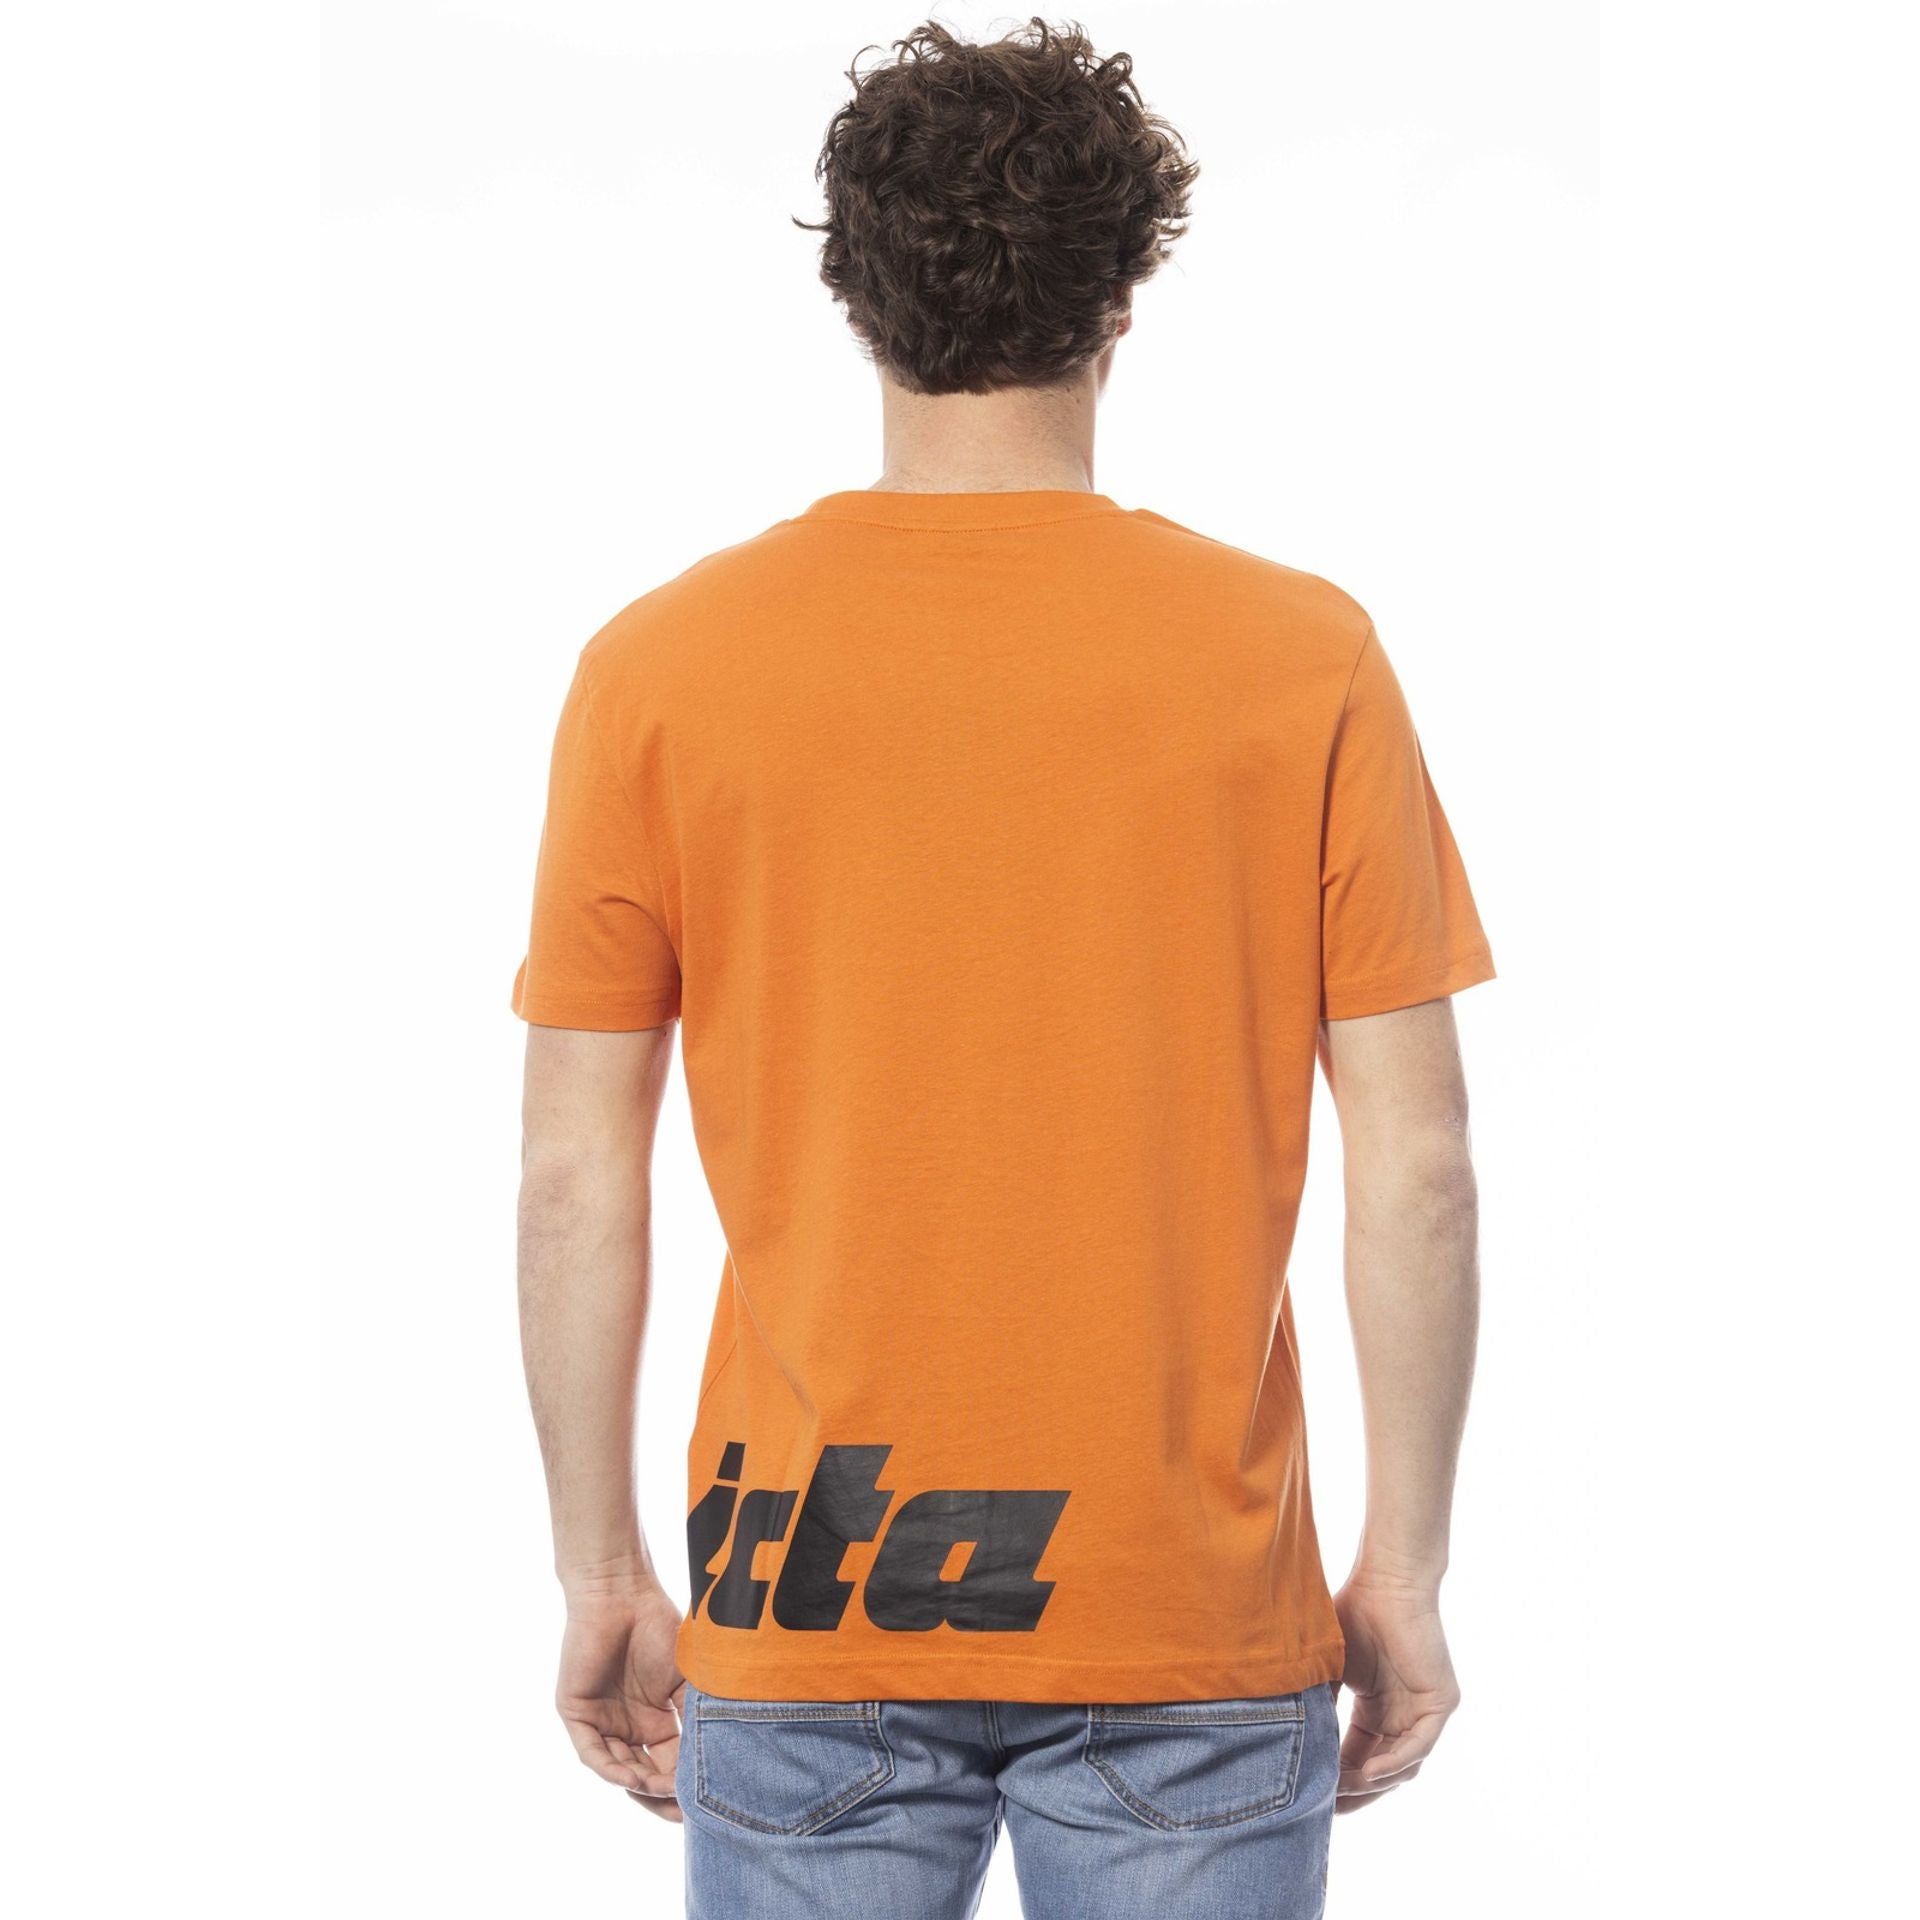 Invicta T-shirt